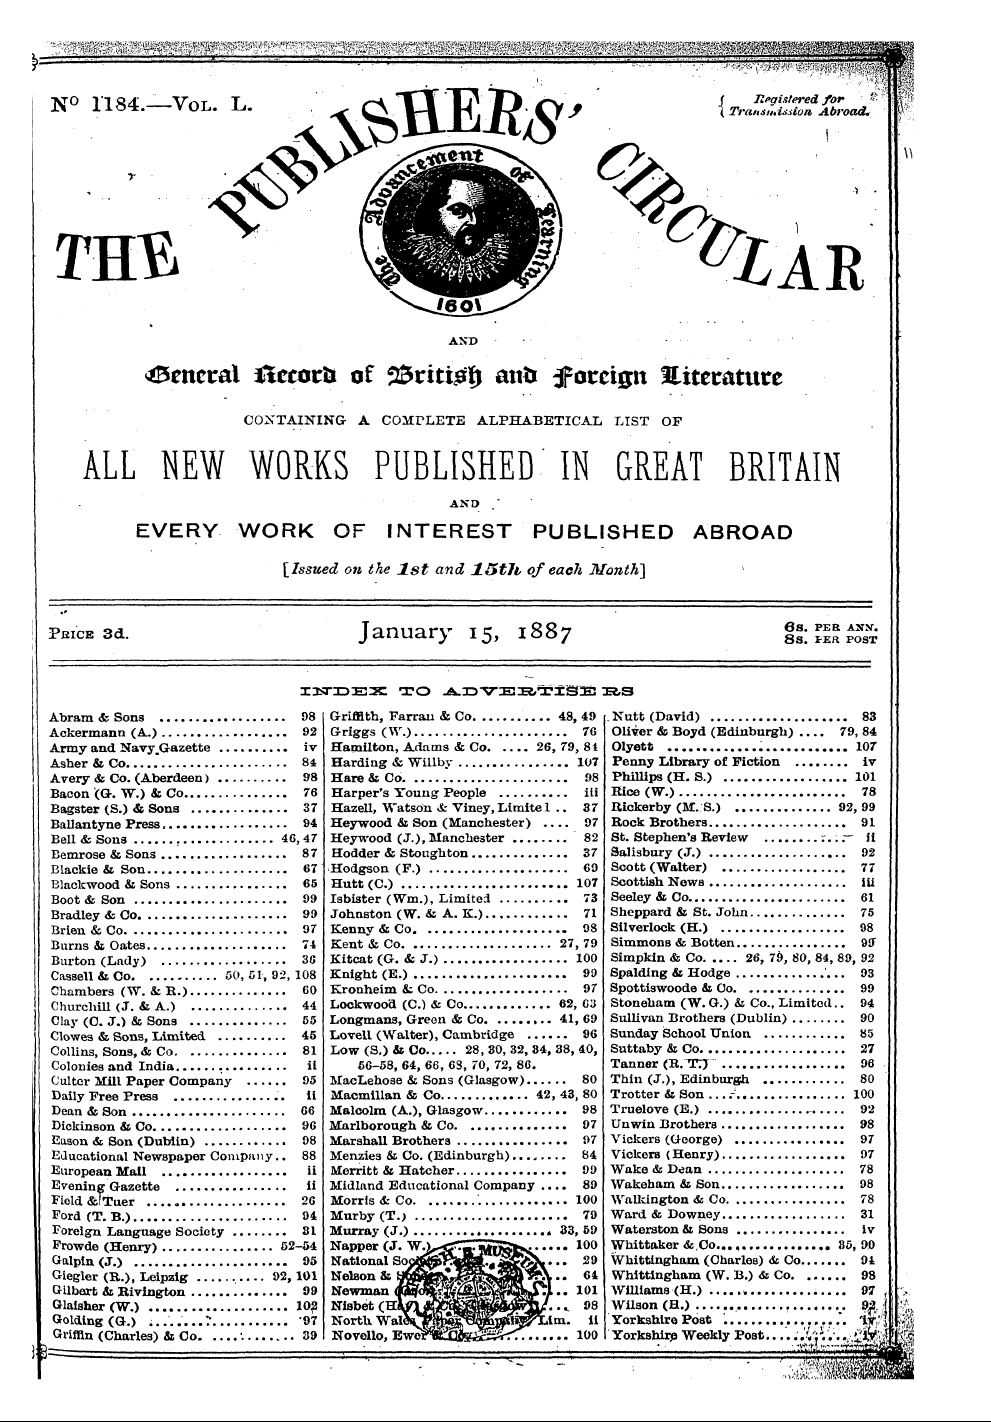 Publishers’ Circular (1880-1890): jS F Y, 1st edition: 3